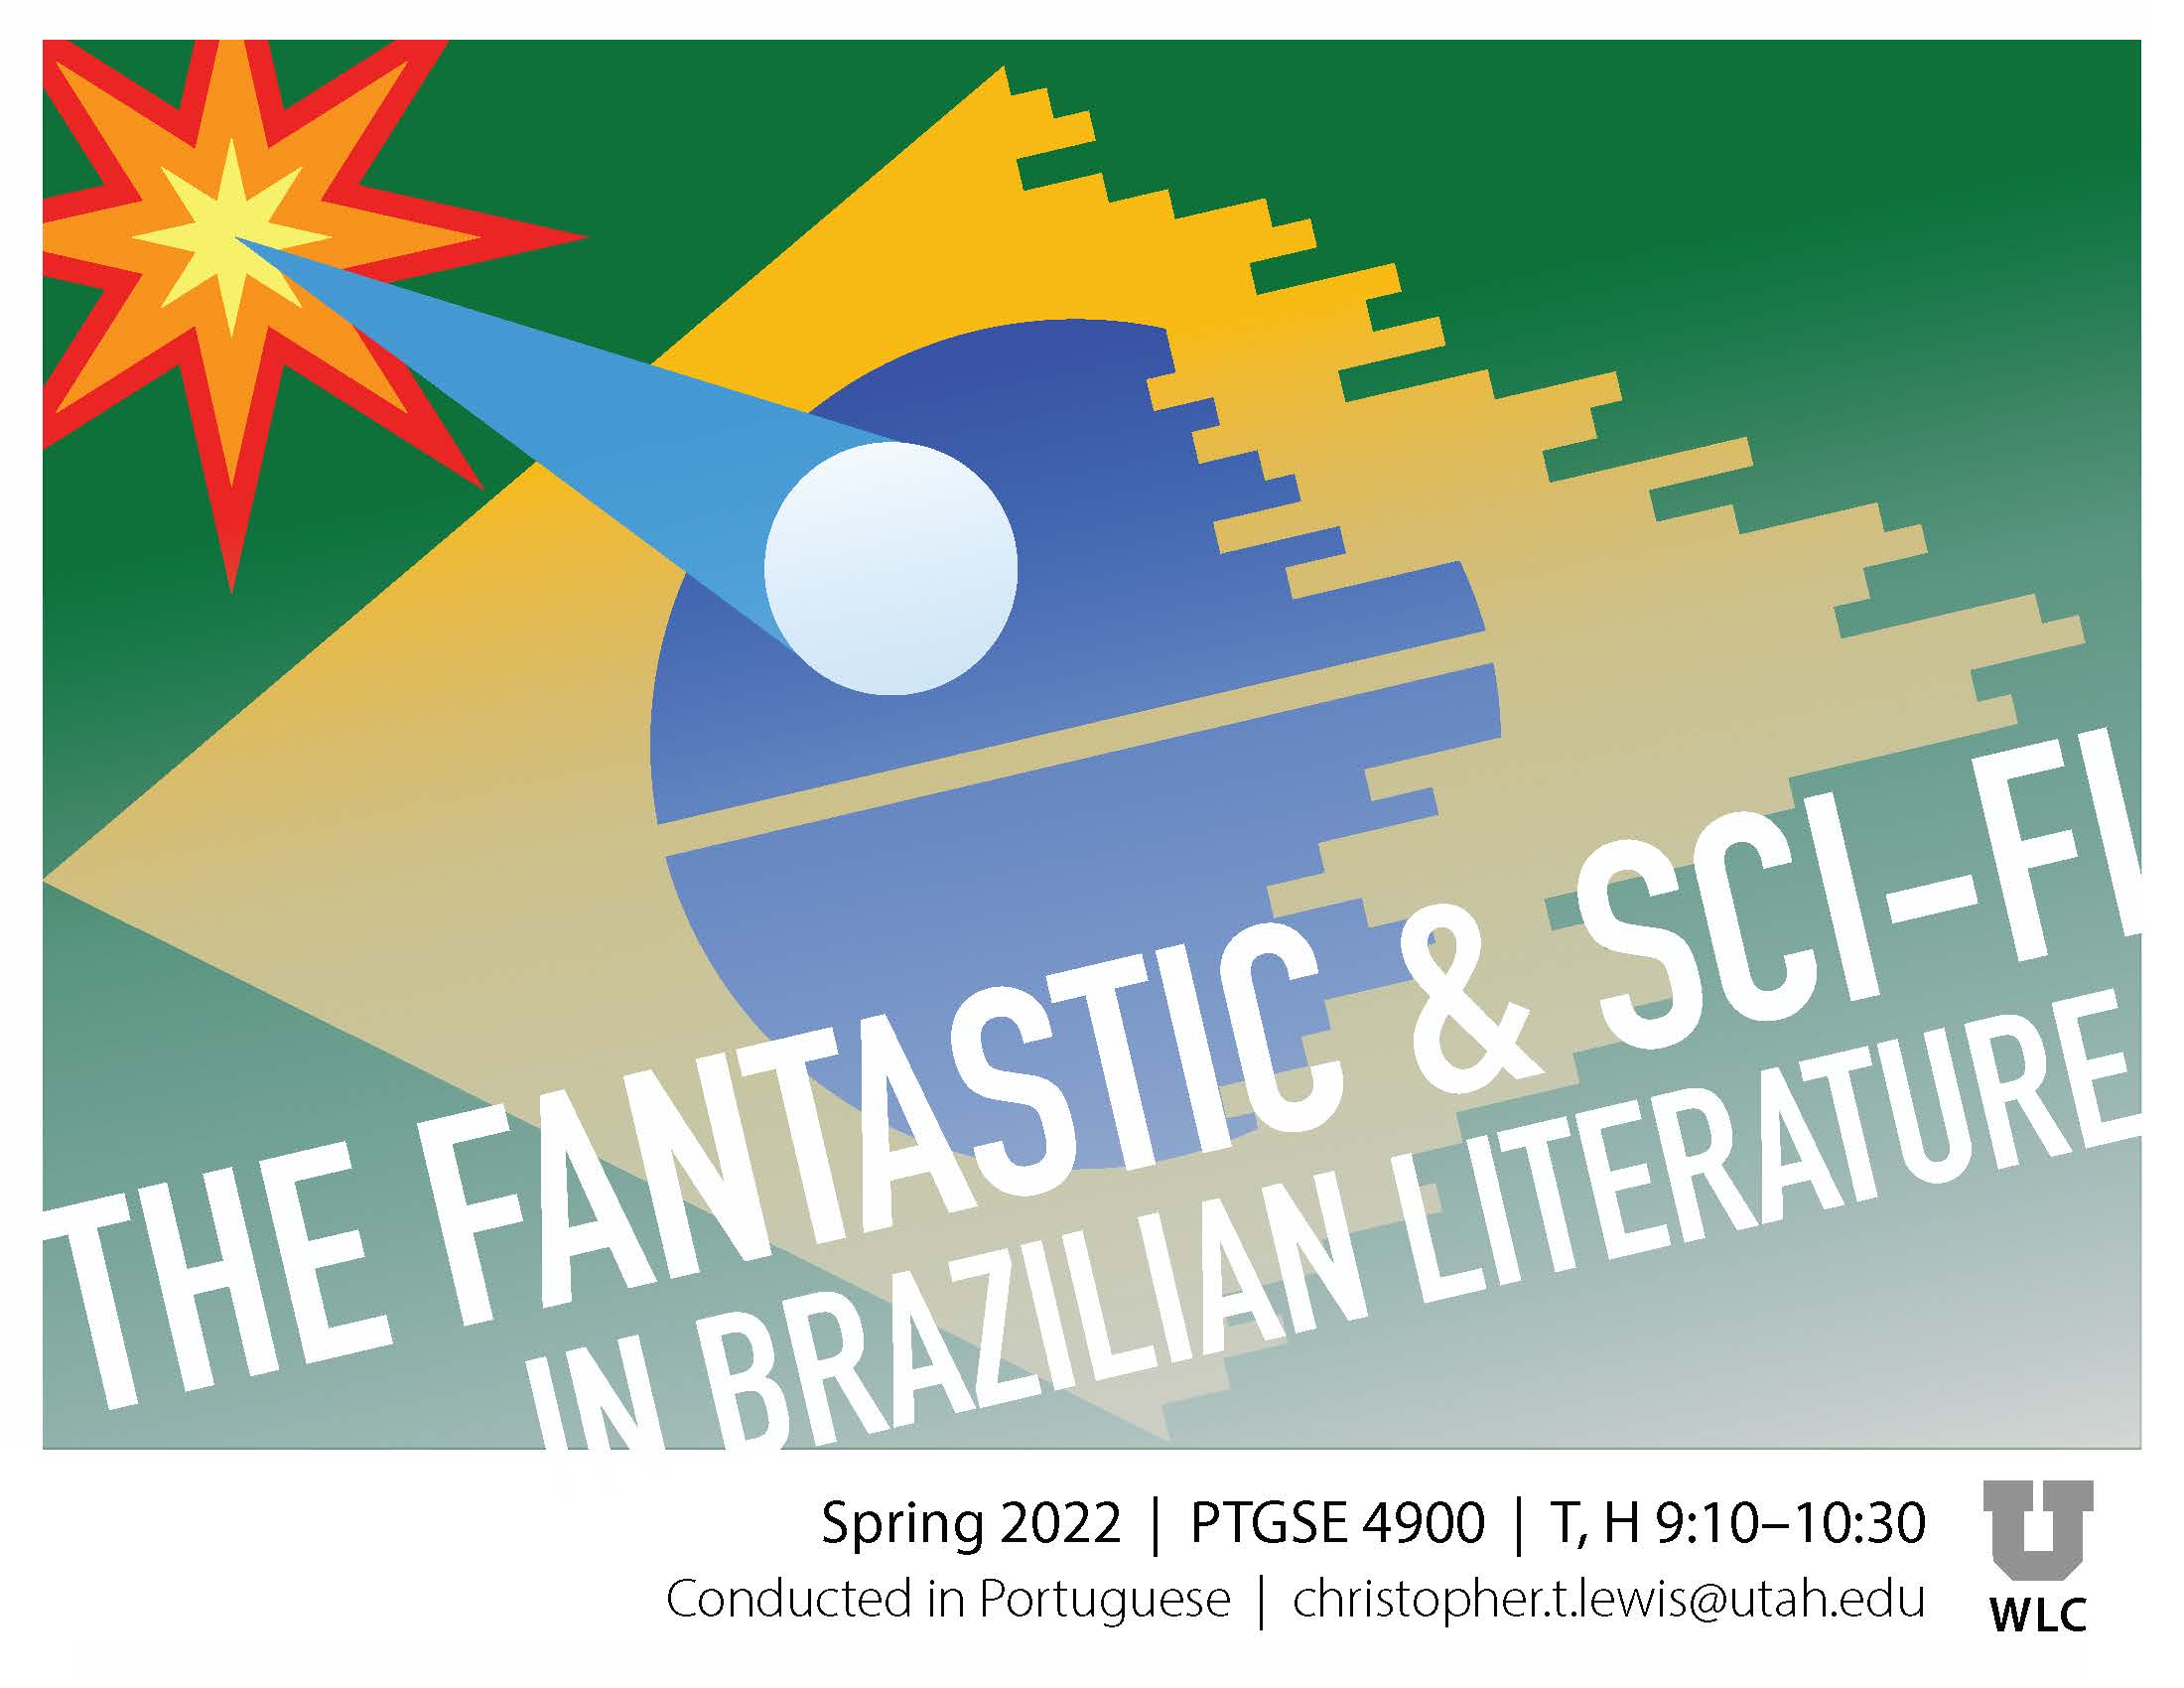 The Fantastic & Sci-Fi in Brazilian Literature